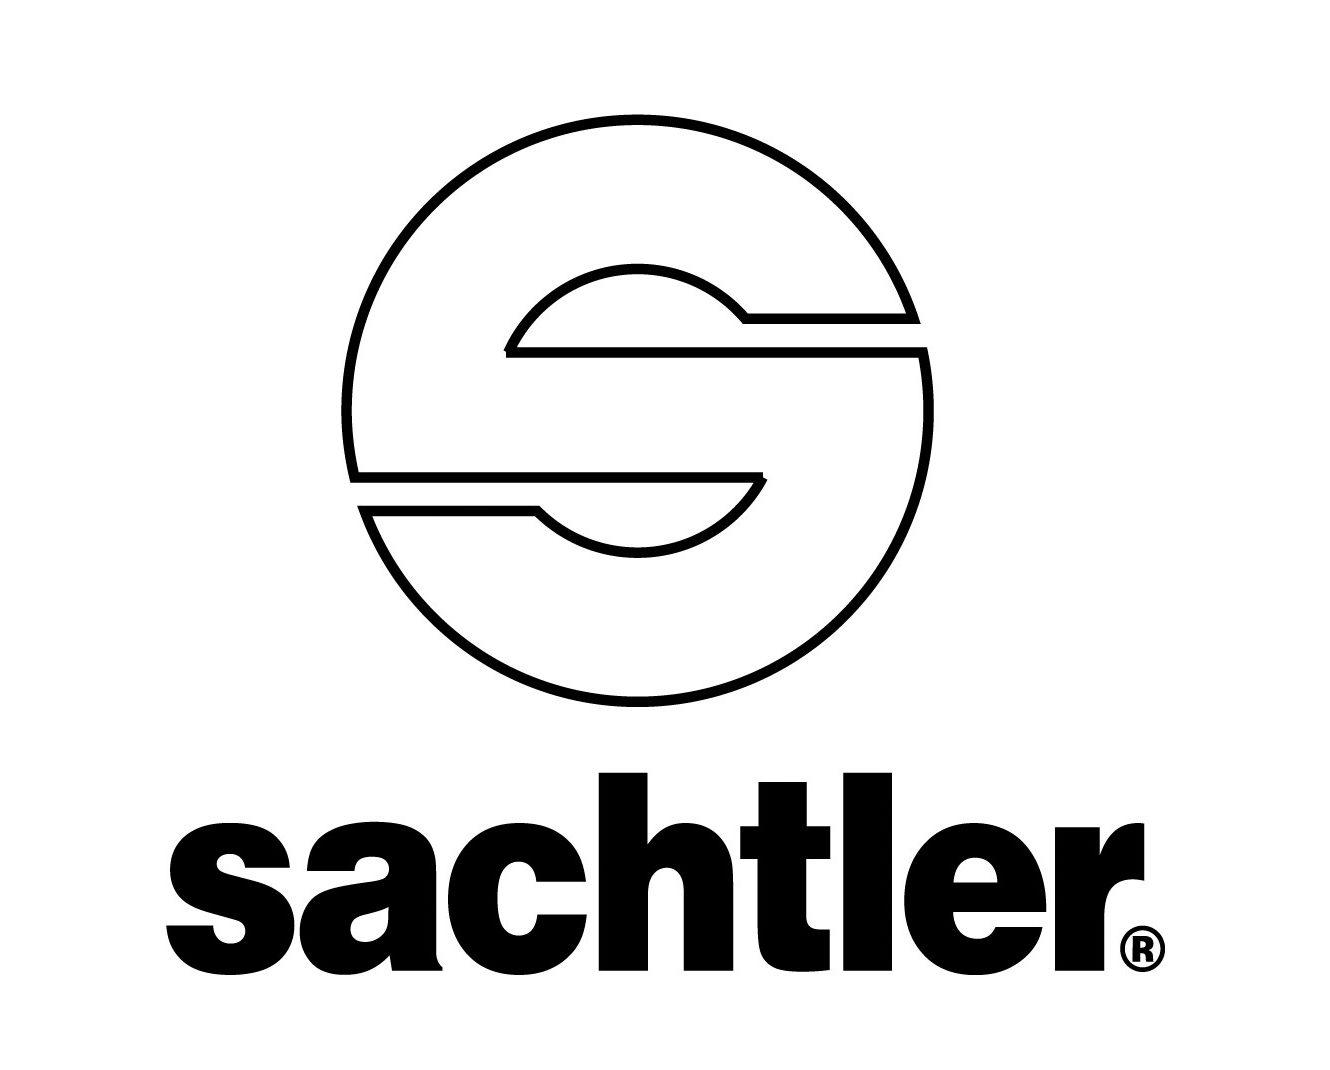 logos/Sachtler.jpg 